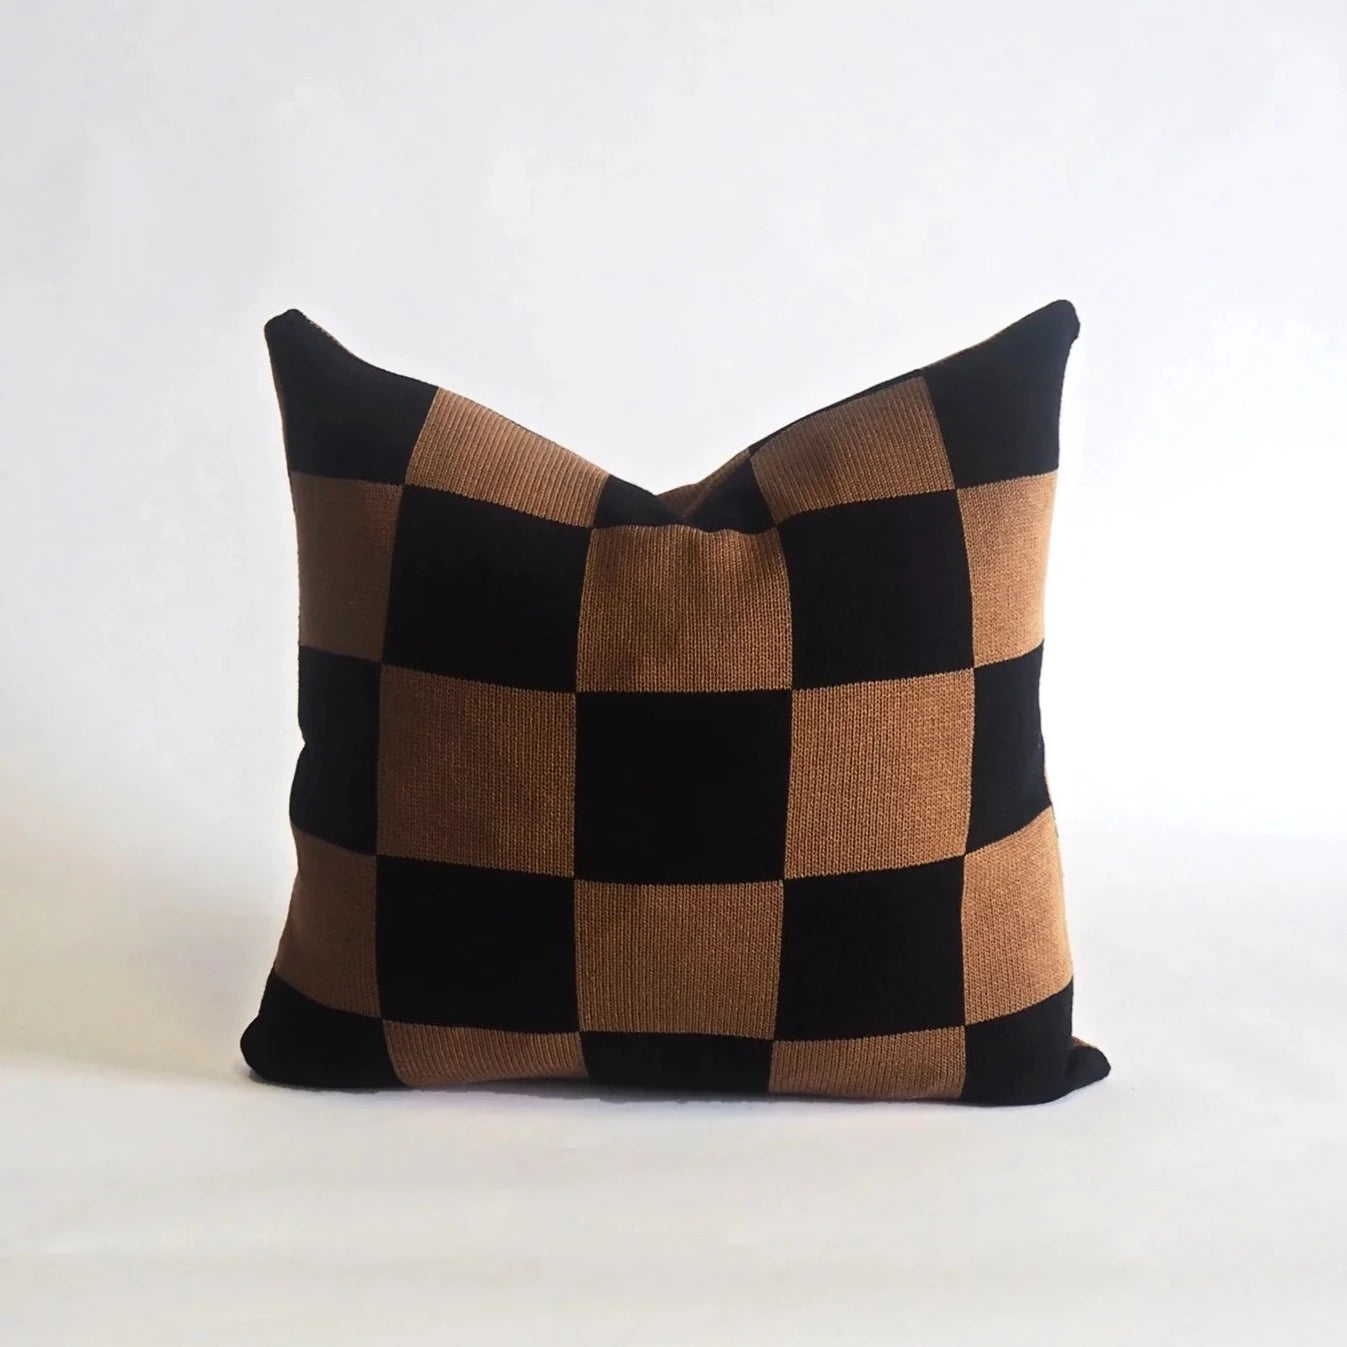 Emmett Black & Chocolate Brown Cushion